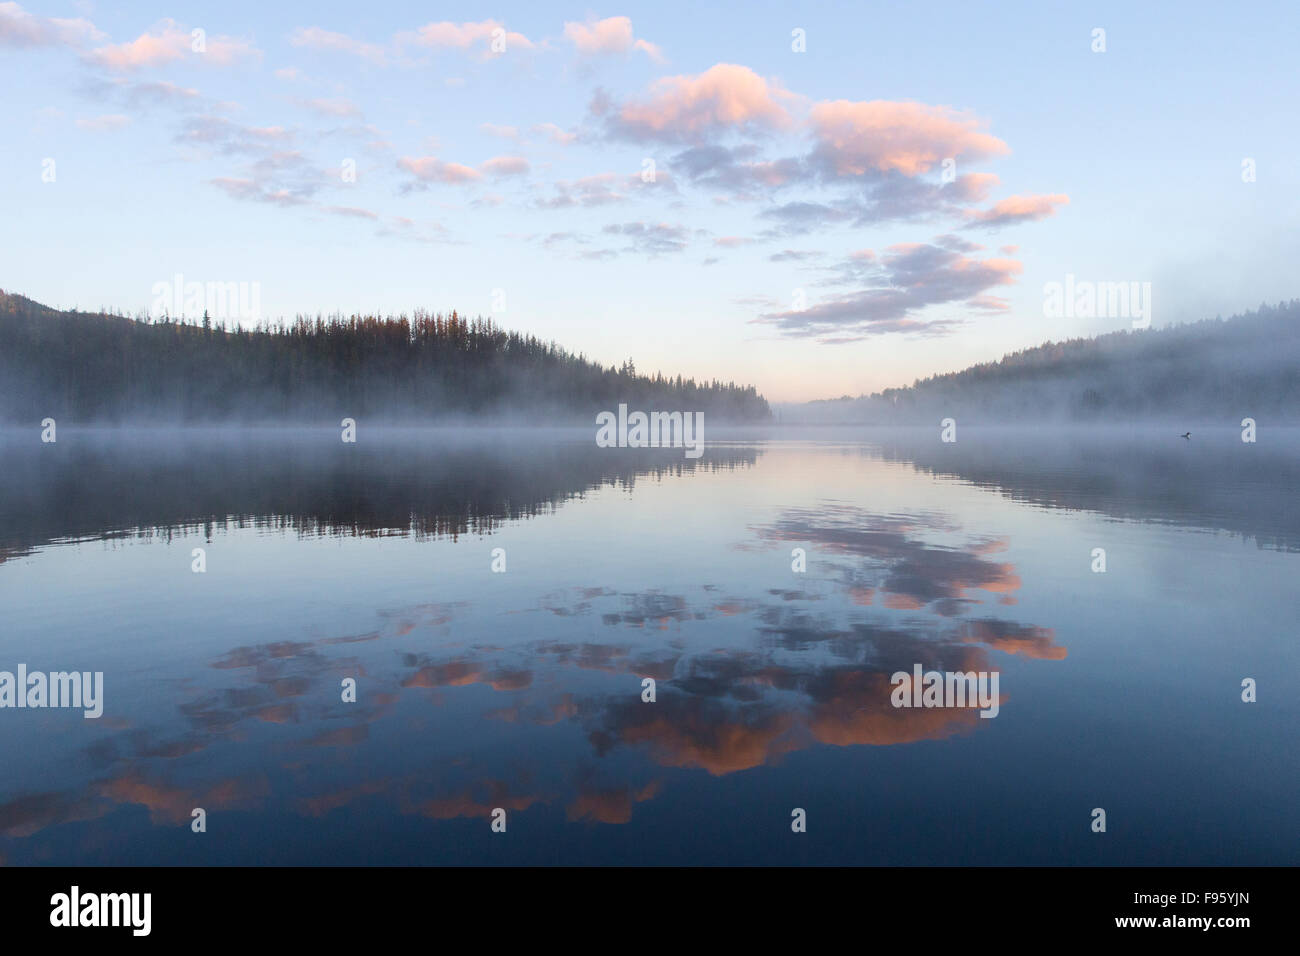 Early morning on Lac Le Jeune, British Columbia. Stock Photo